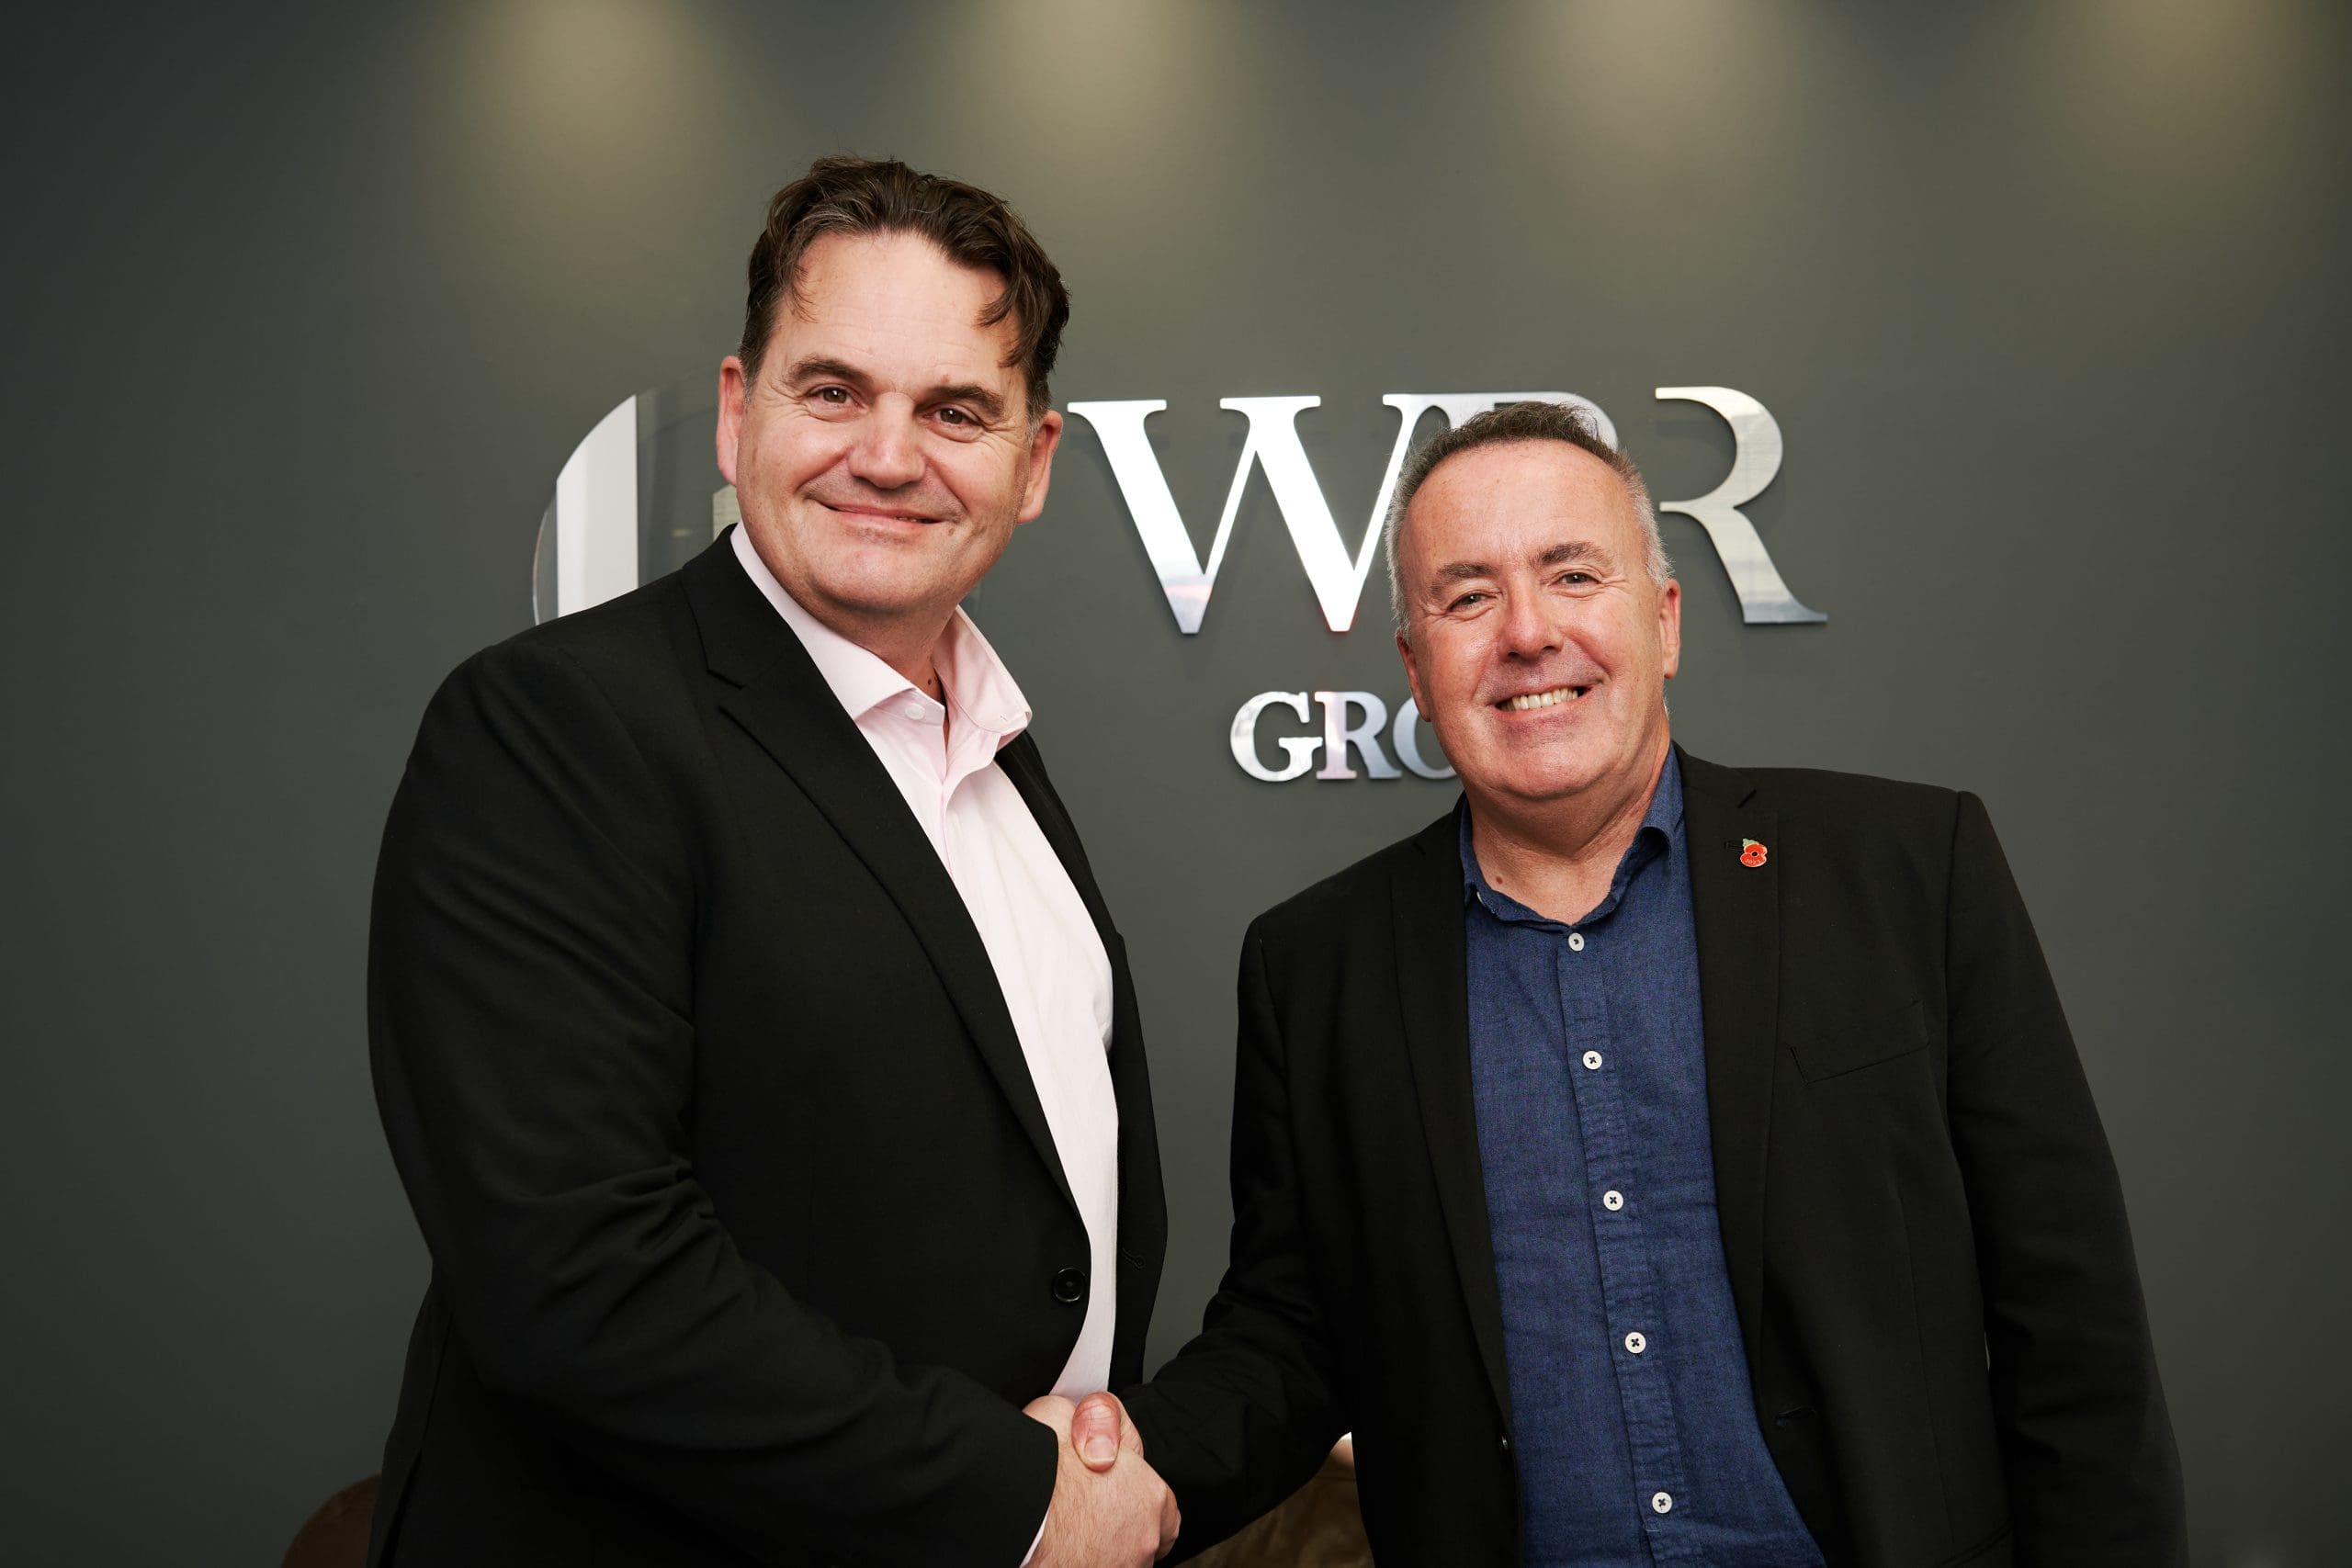 Matthew Evans joins WBR Group